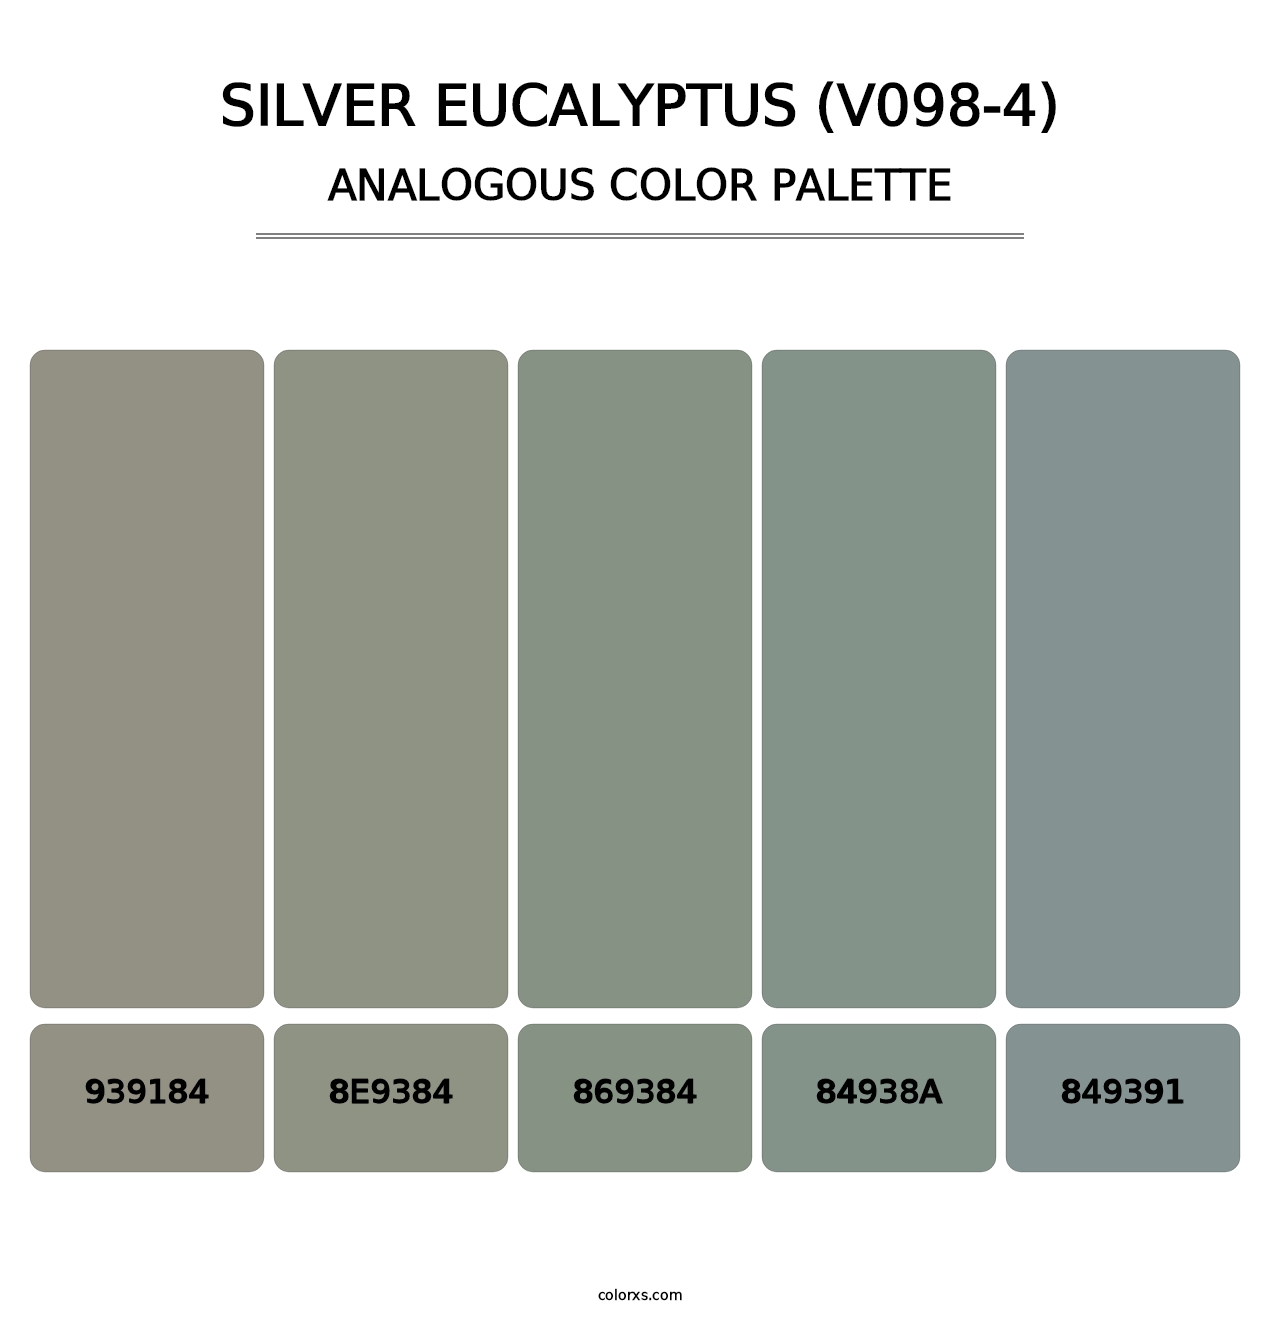 Silver Eucalyptus (V098-4) - Analogous Color Palette